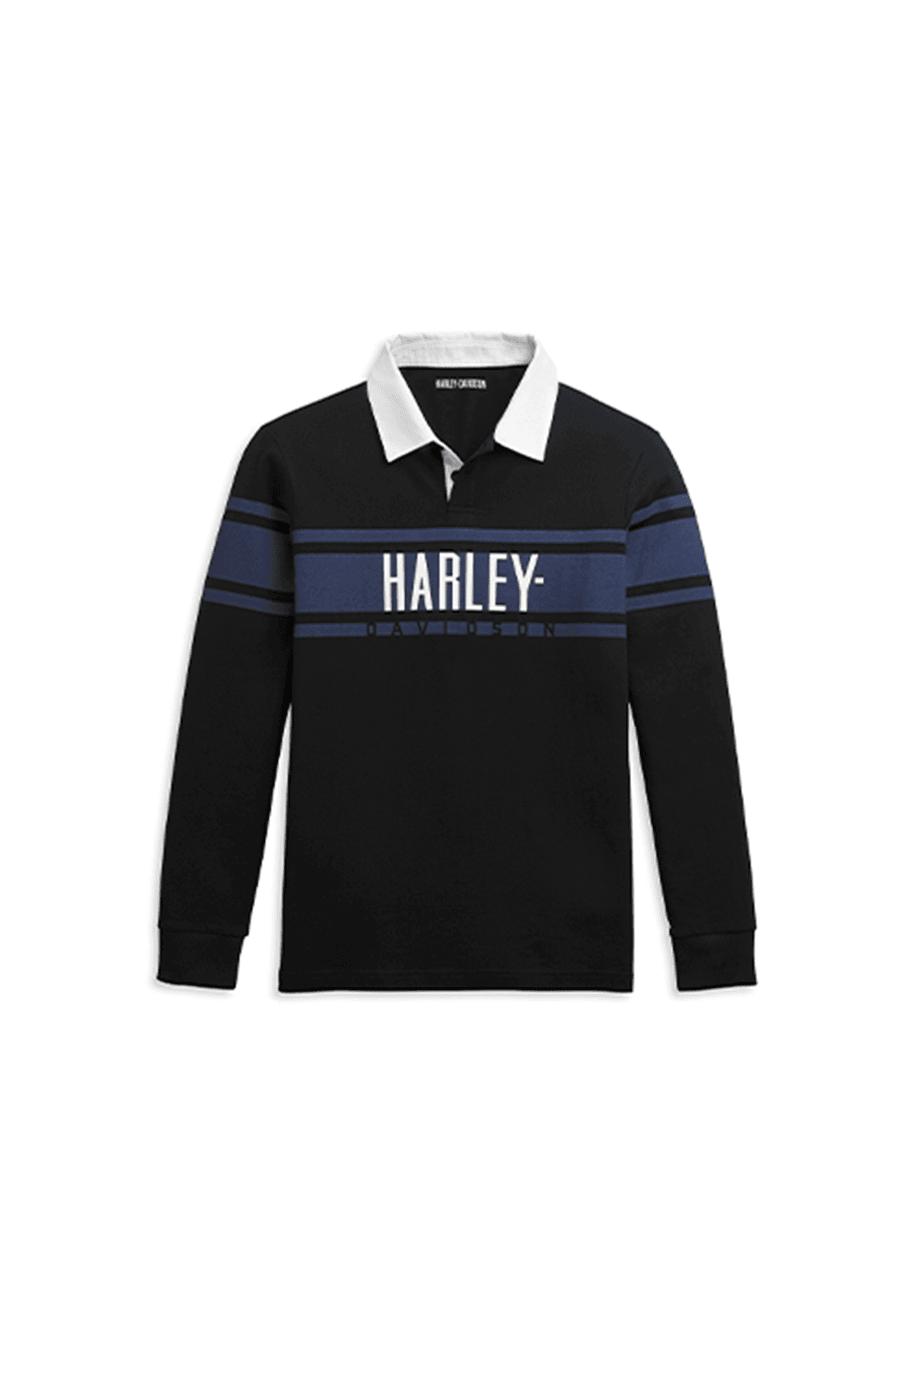 Harley-Davidson® Tee-Knit, Black